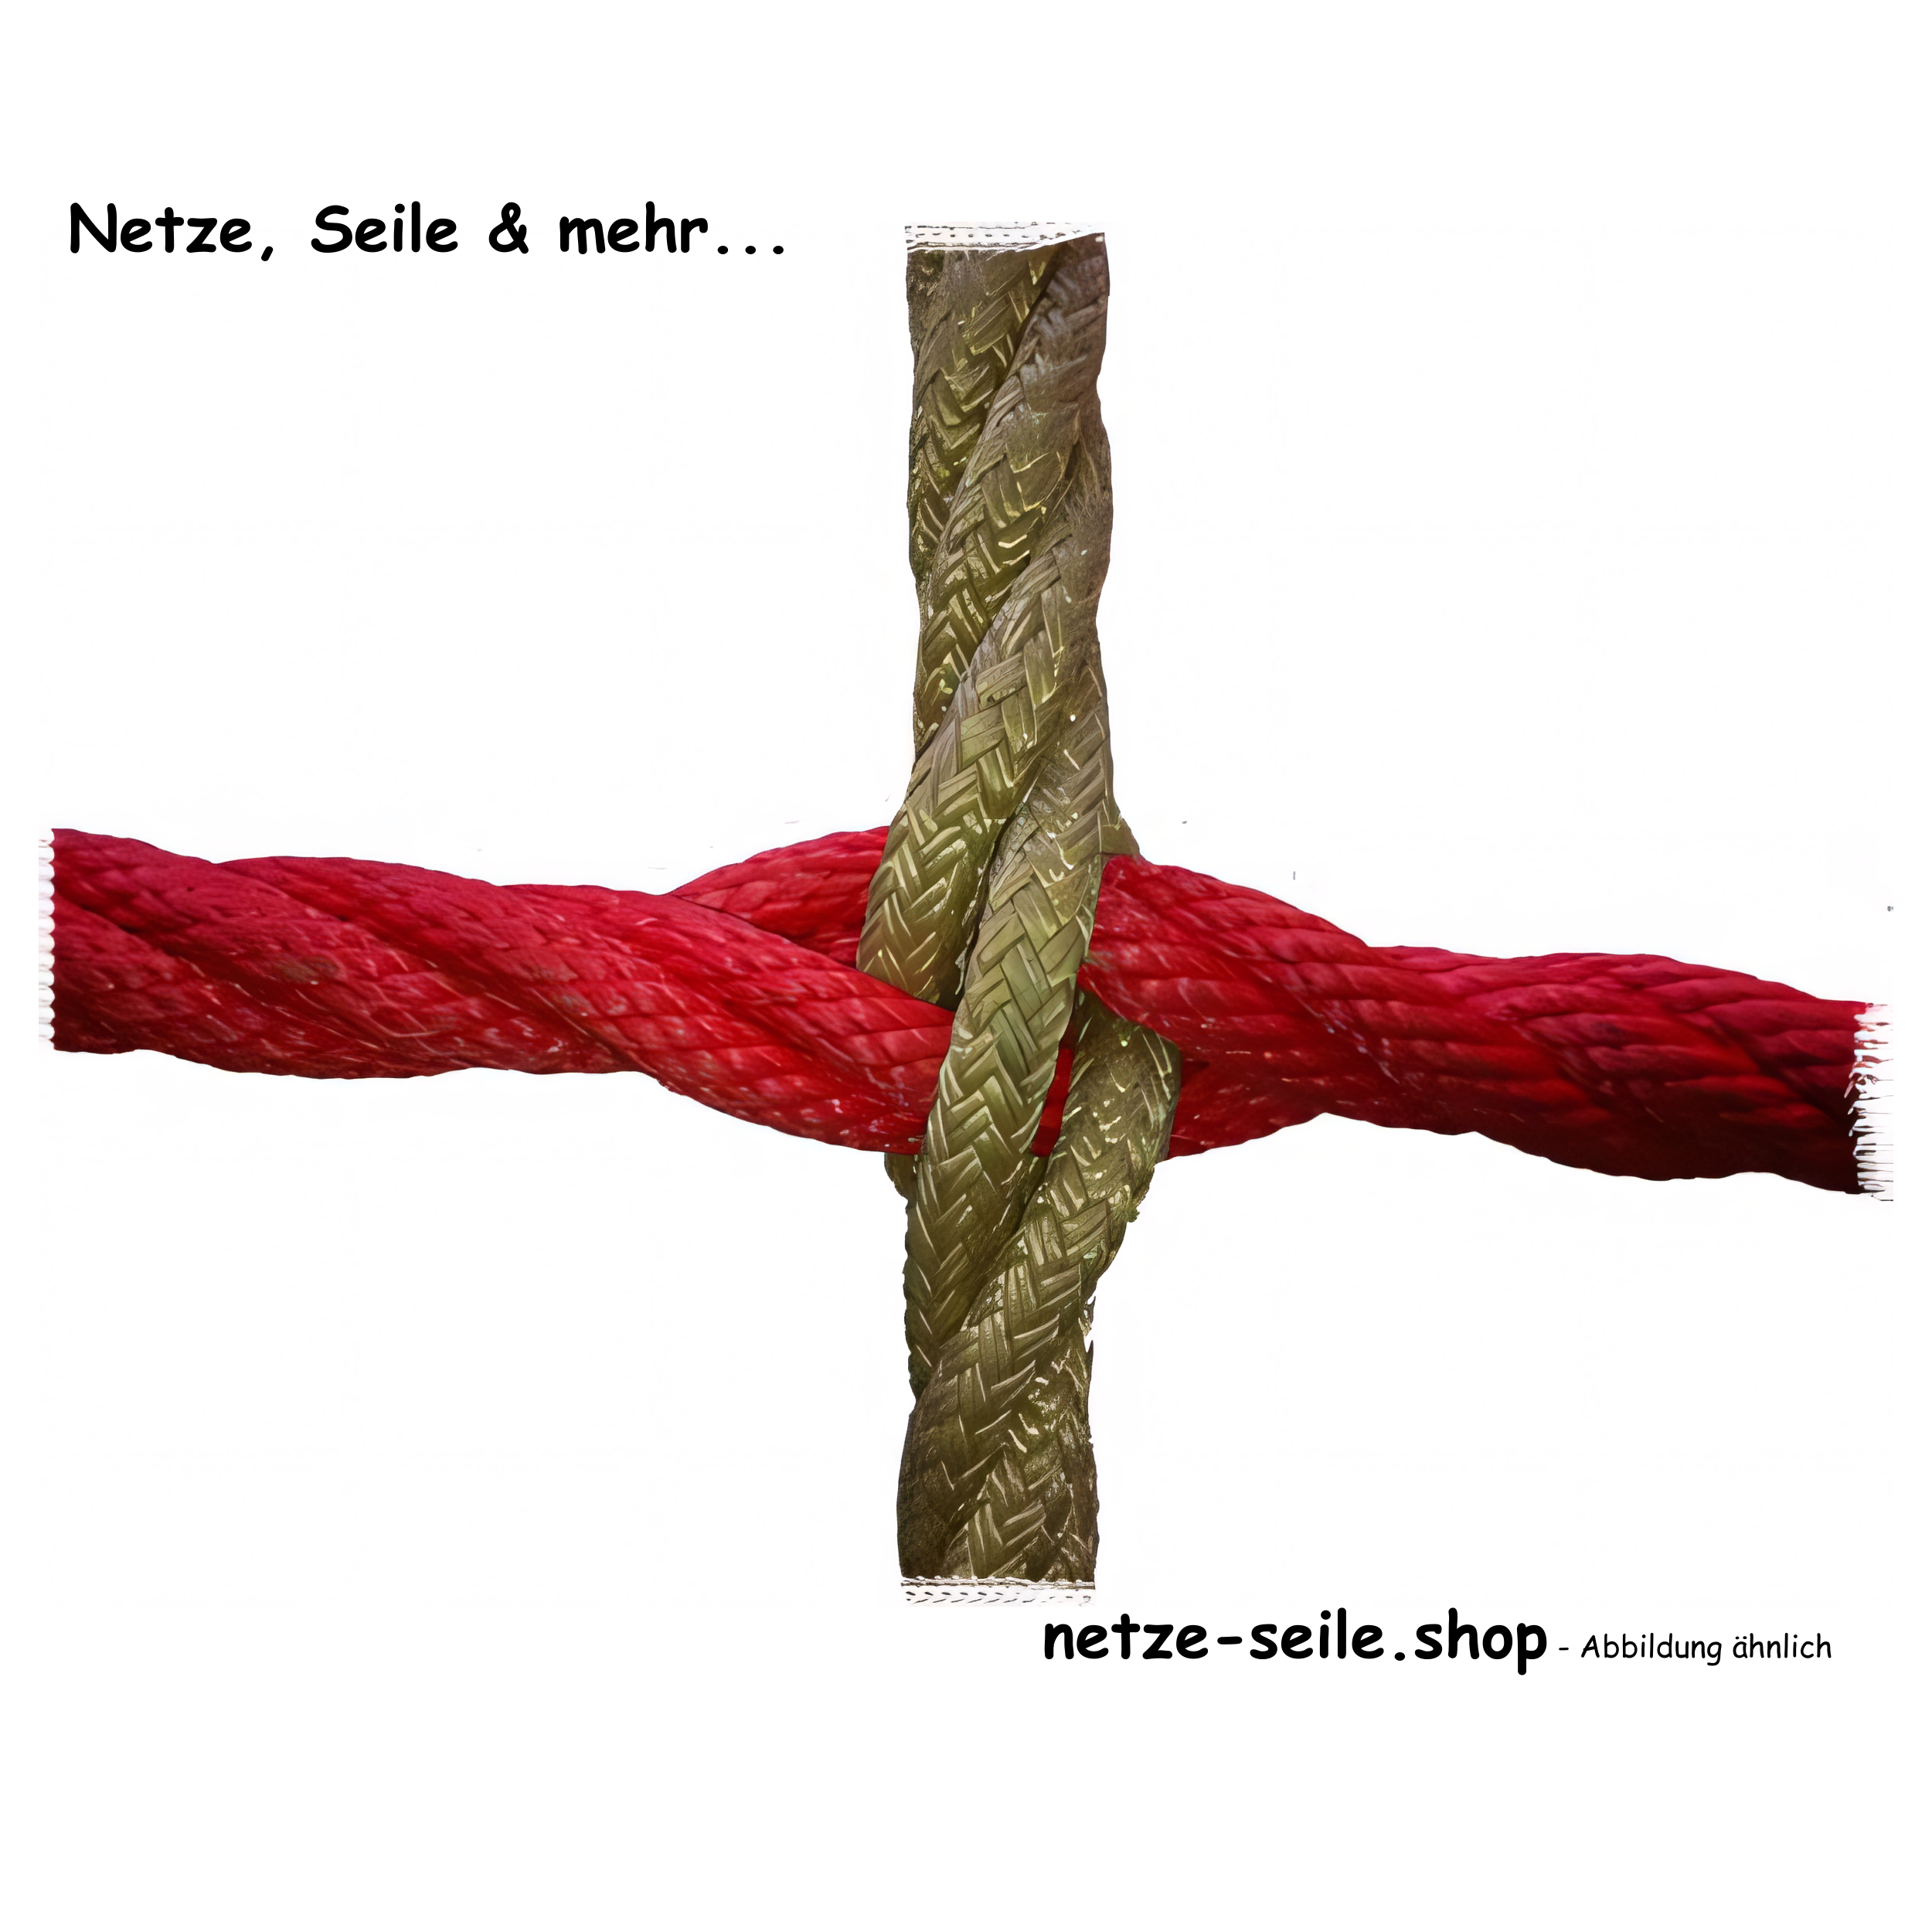 Climbing net made of Ø 16 mm Hercules rope, # 250 mm mesh size, knots spliced by hand